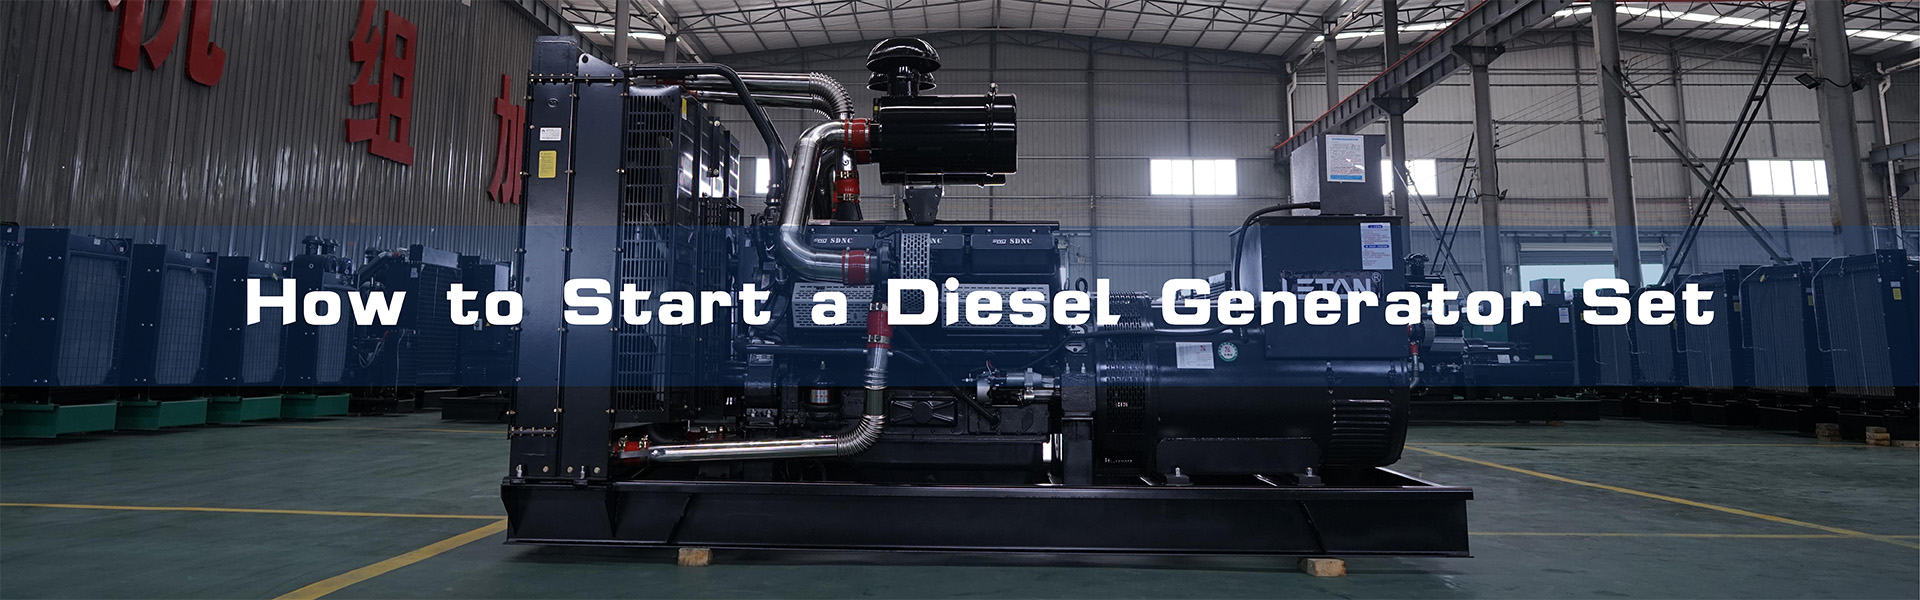 How to Start a Diesel Generator Set